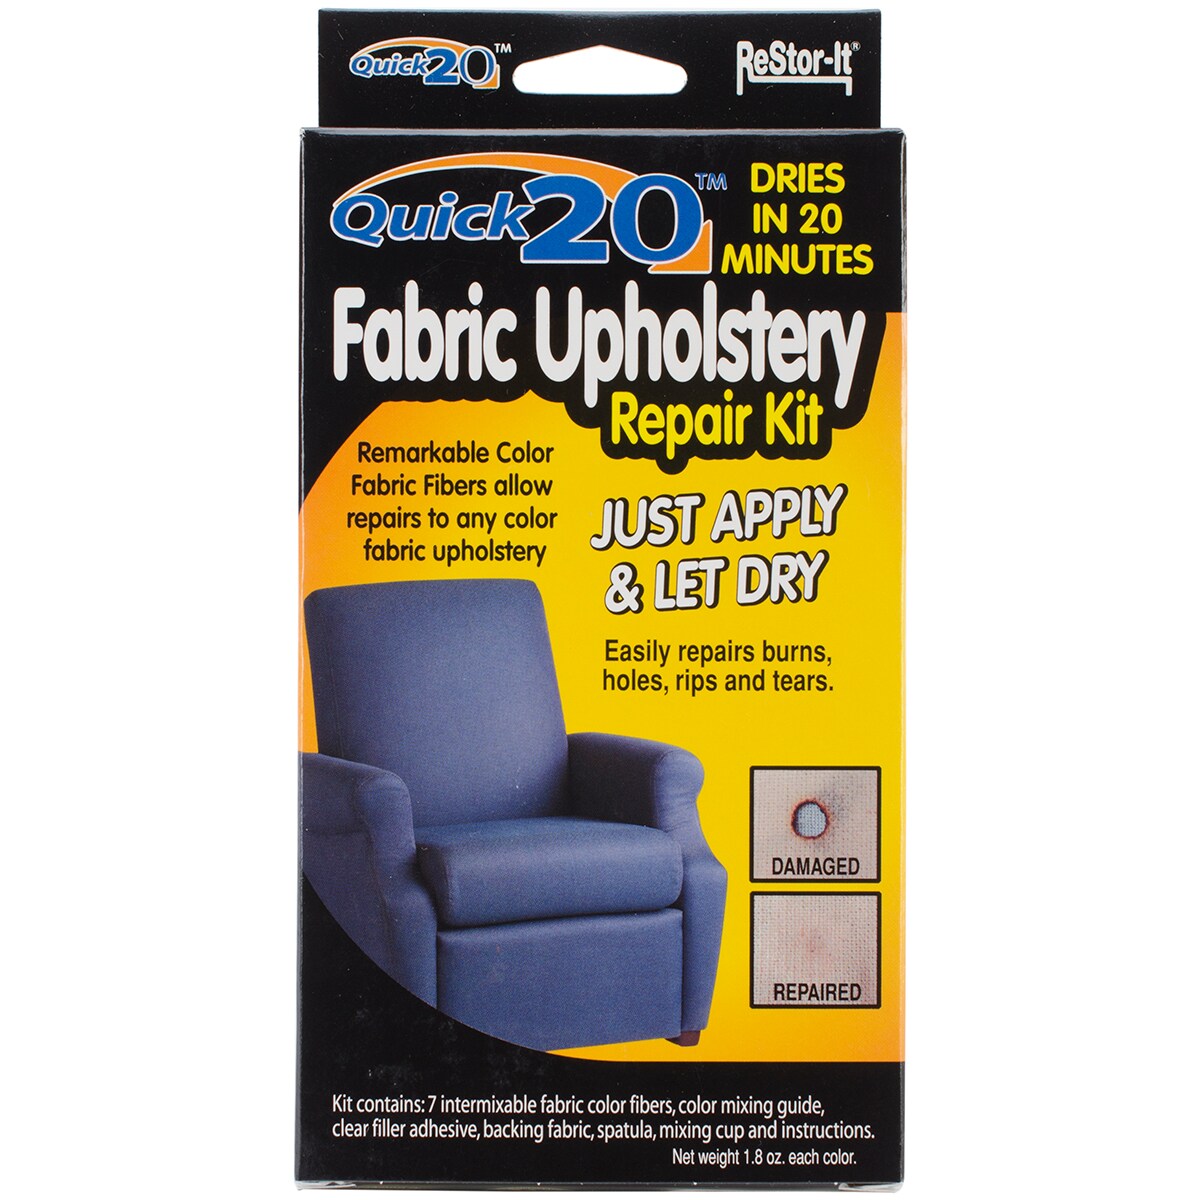 Restor-It Quick 20 Fabric Upholstery Repair Kit